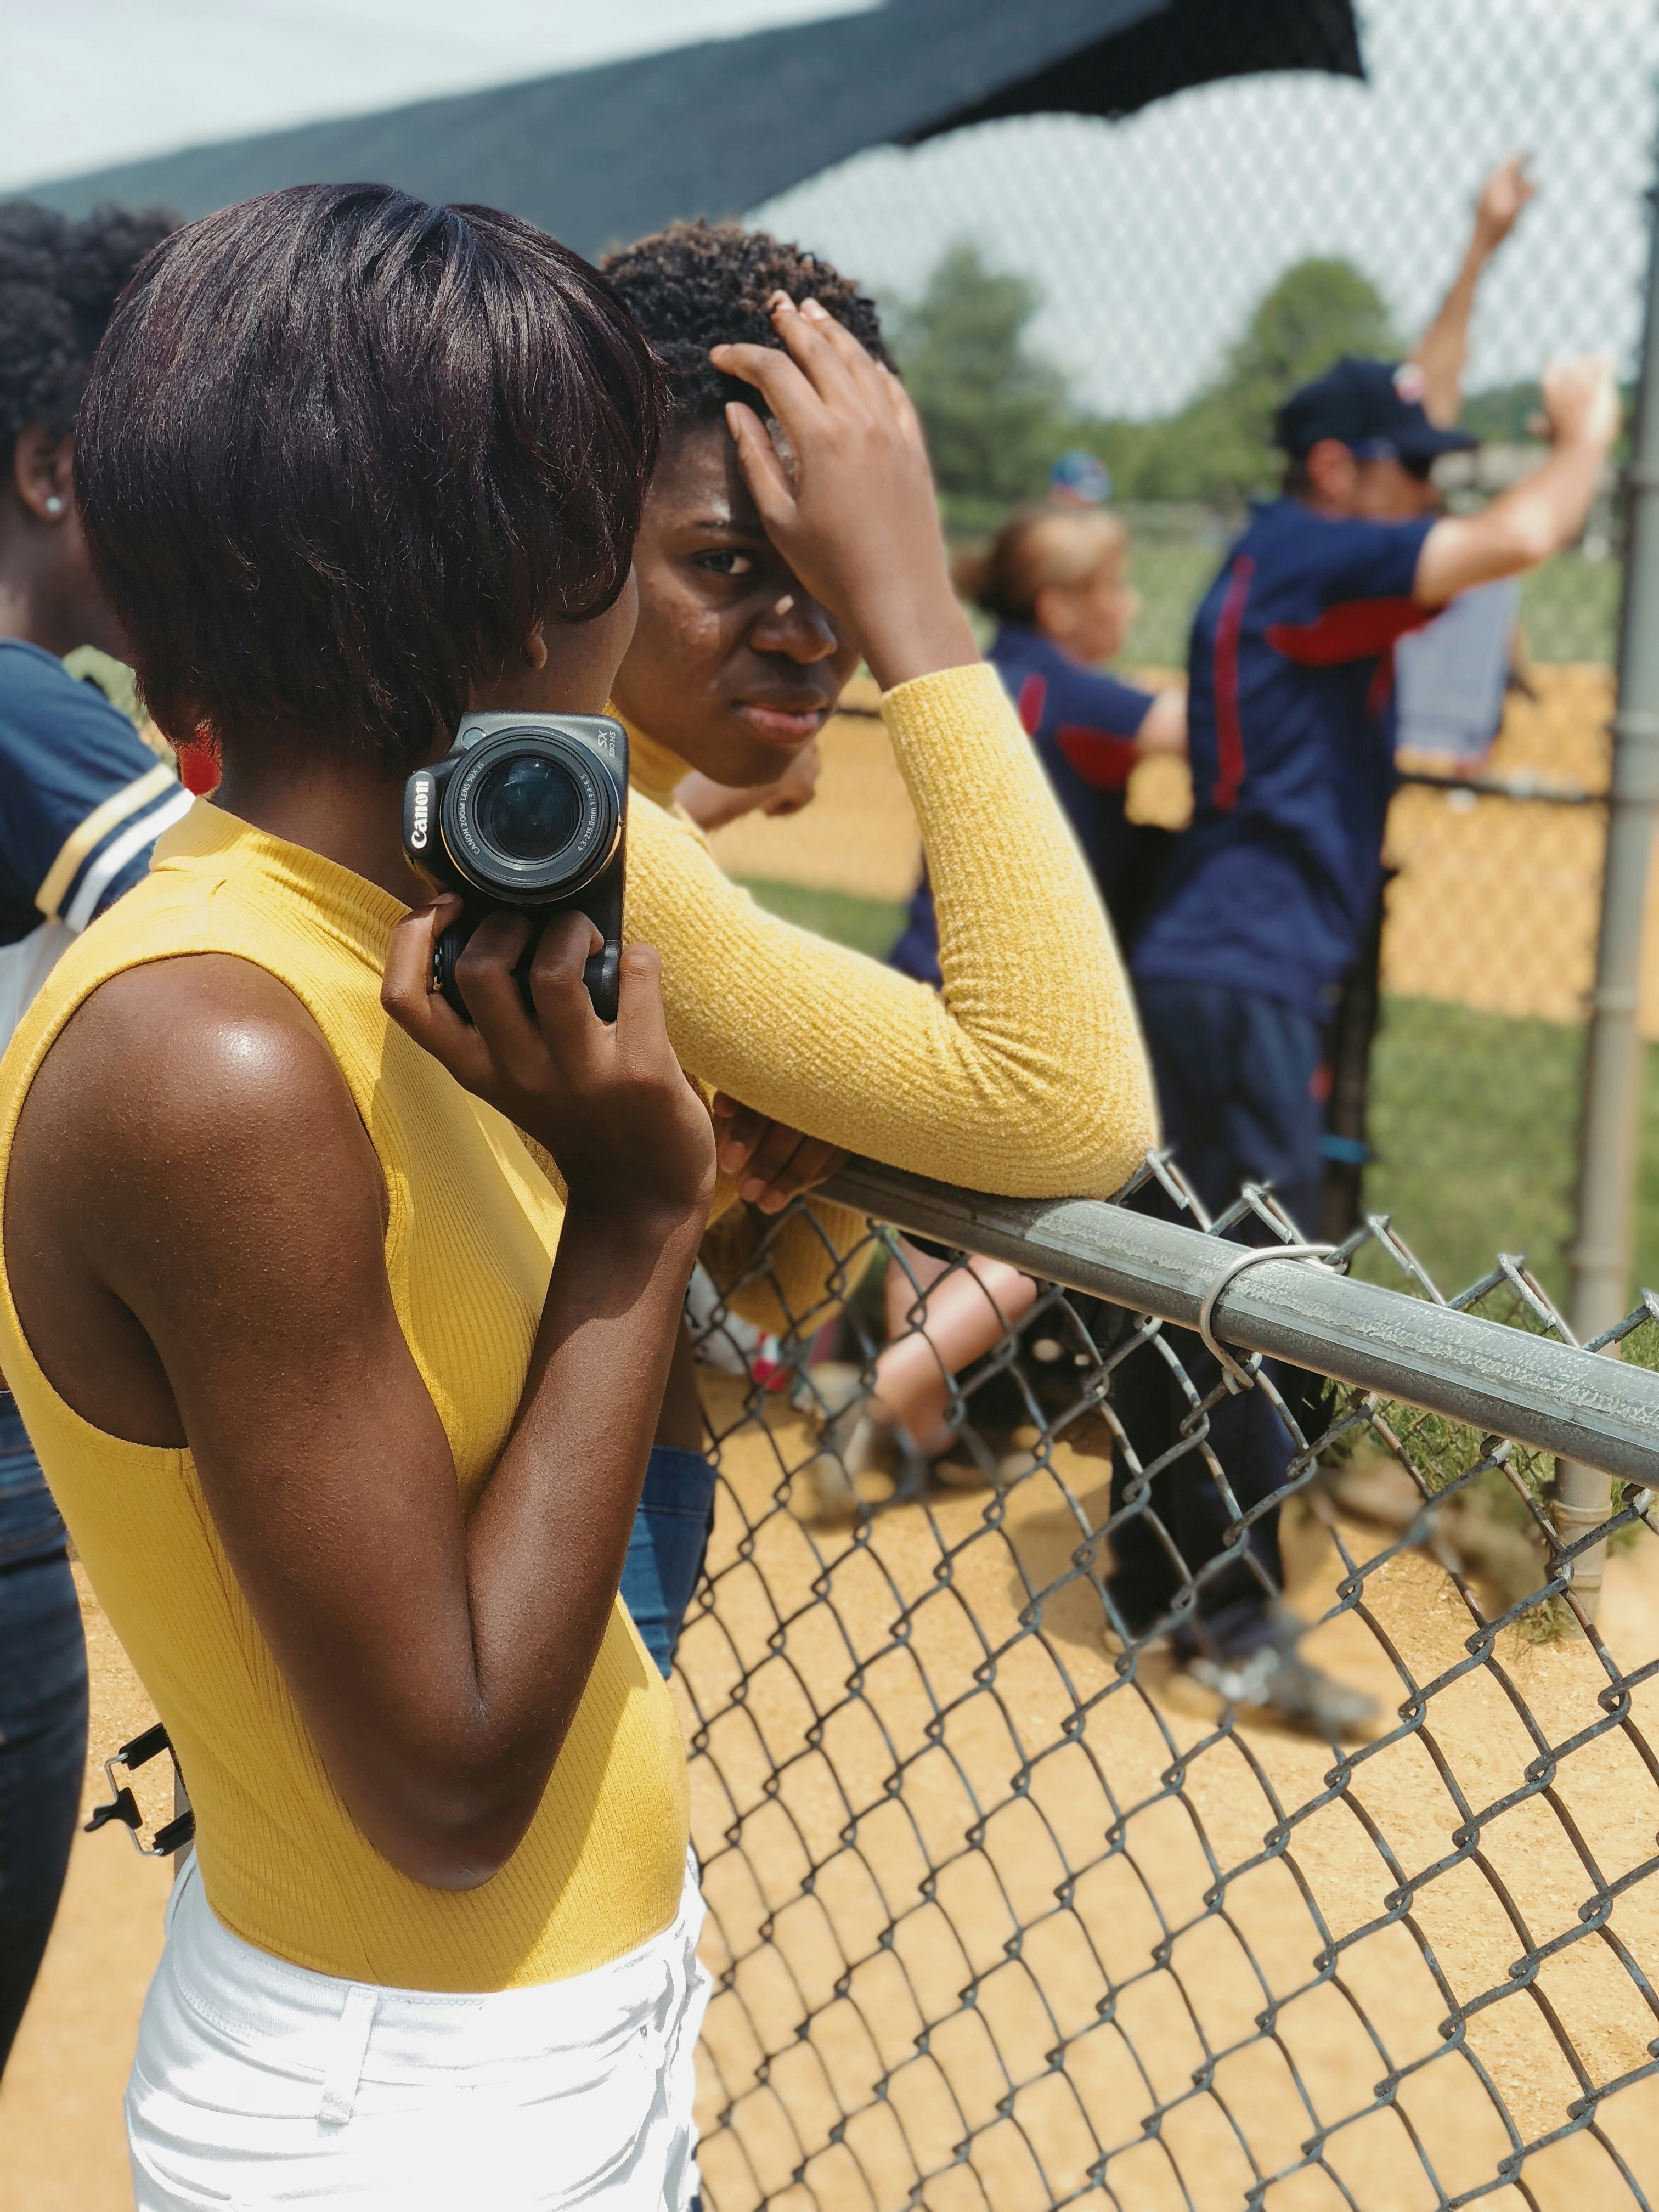 Girl holding camera at a softball game.